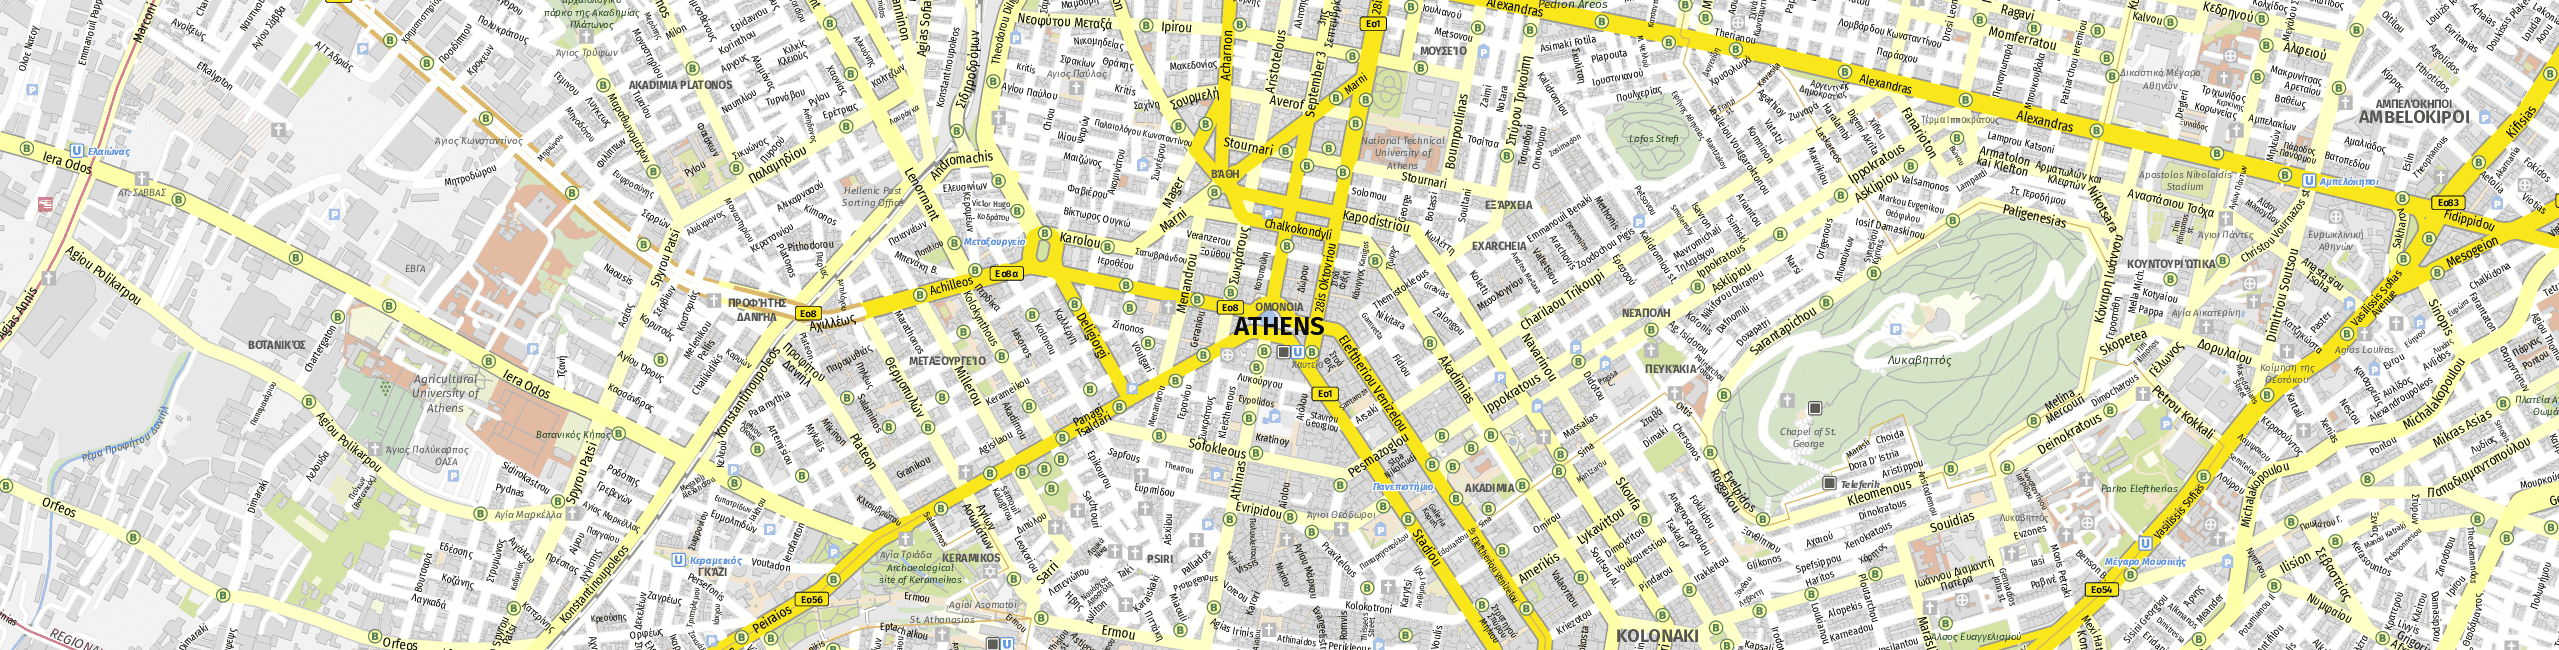 Stadtplan Athen zum Downloaden.